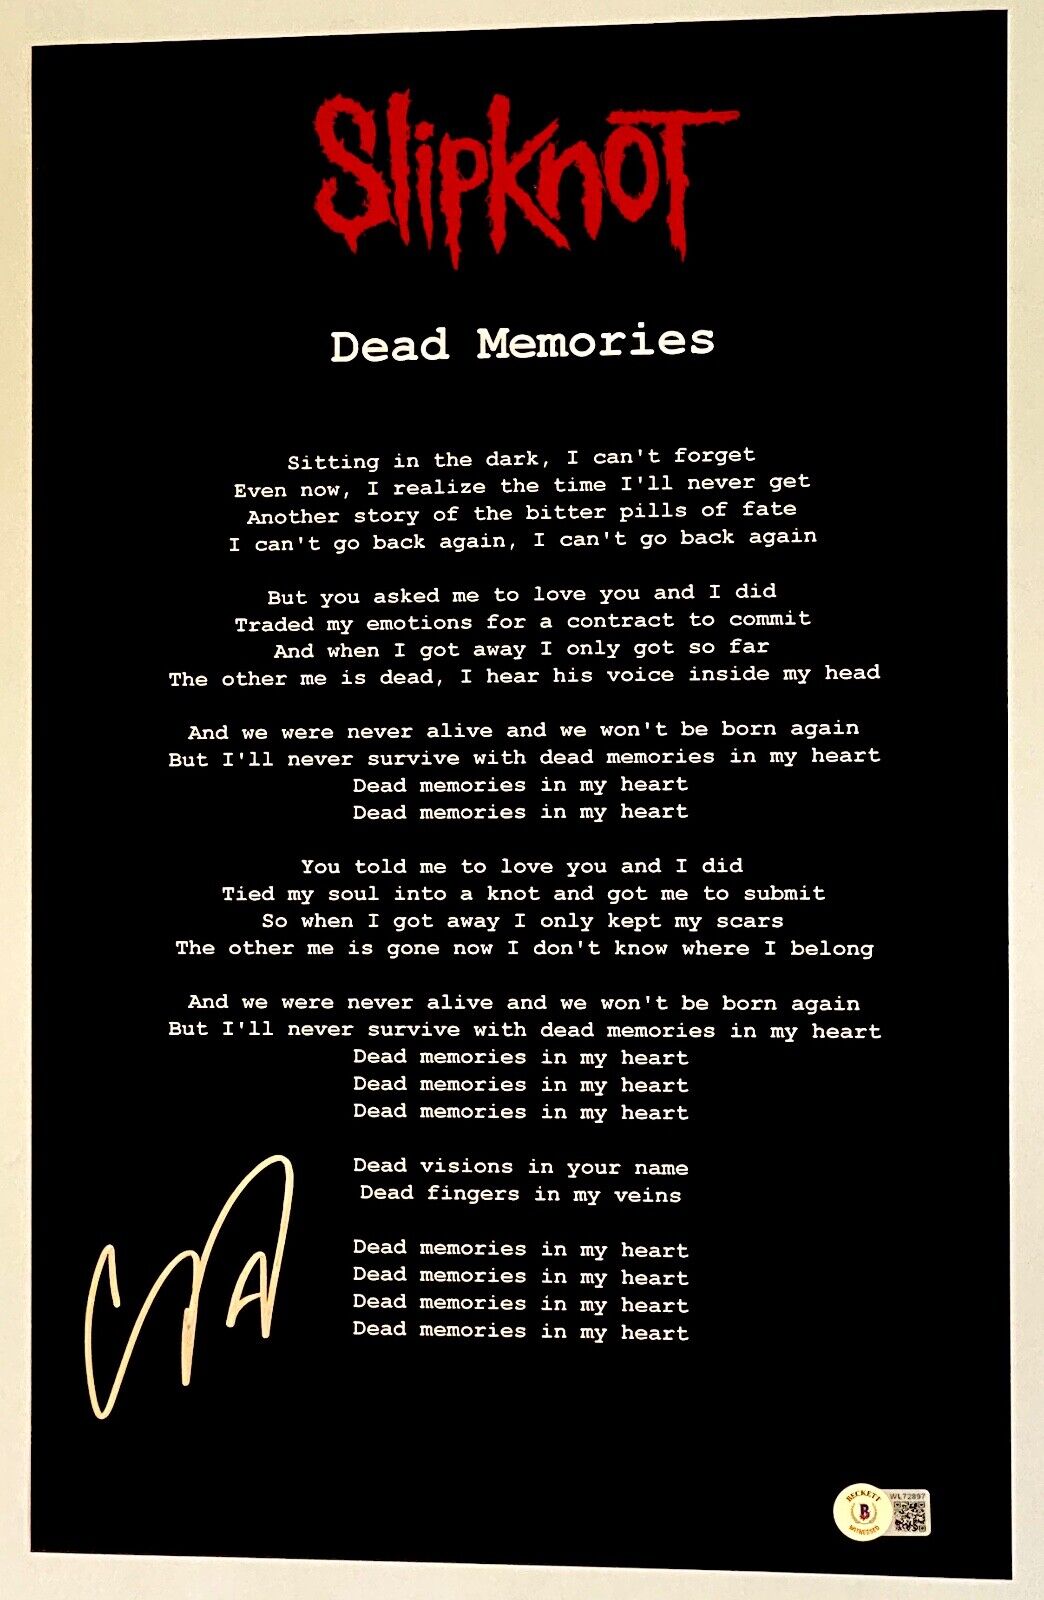 Corey Taylor Signed Slipknot Dead Memories 11x17 Lyrics Poster Beckett COA